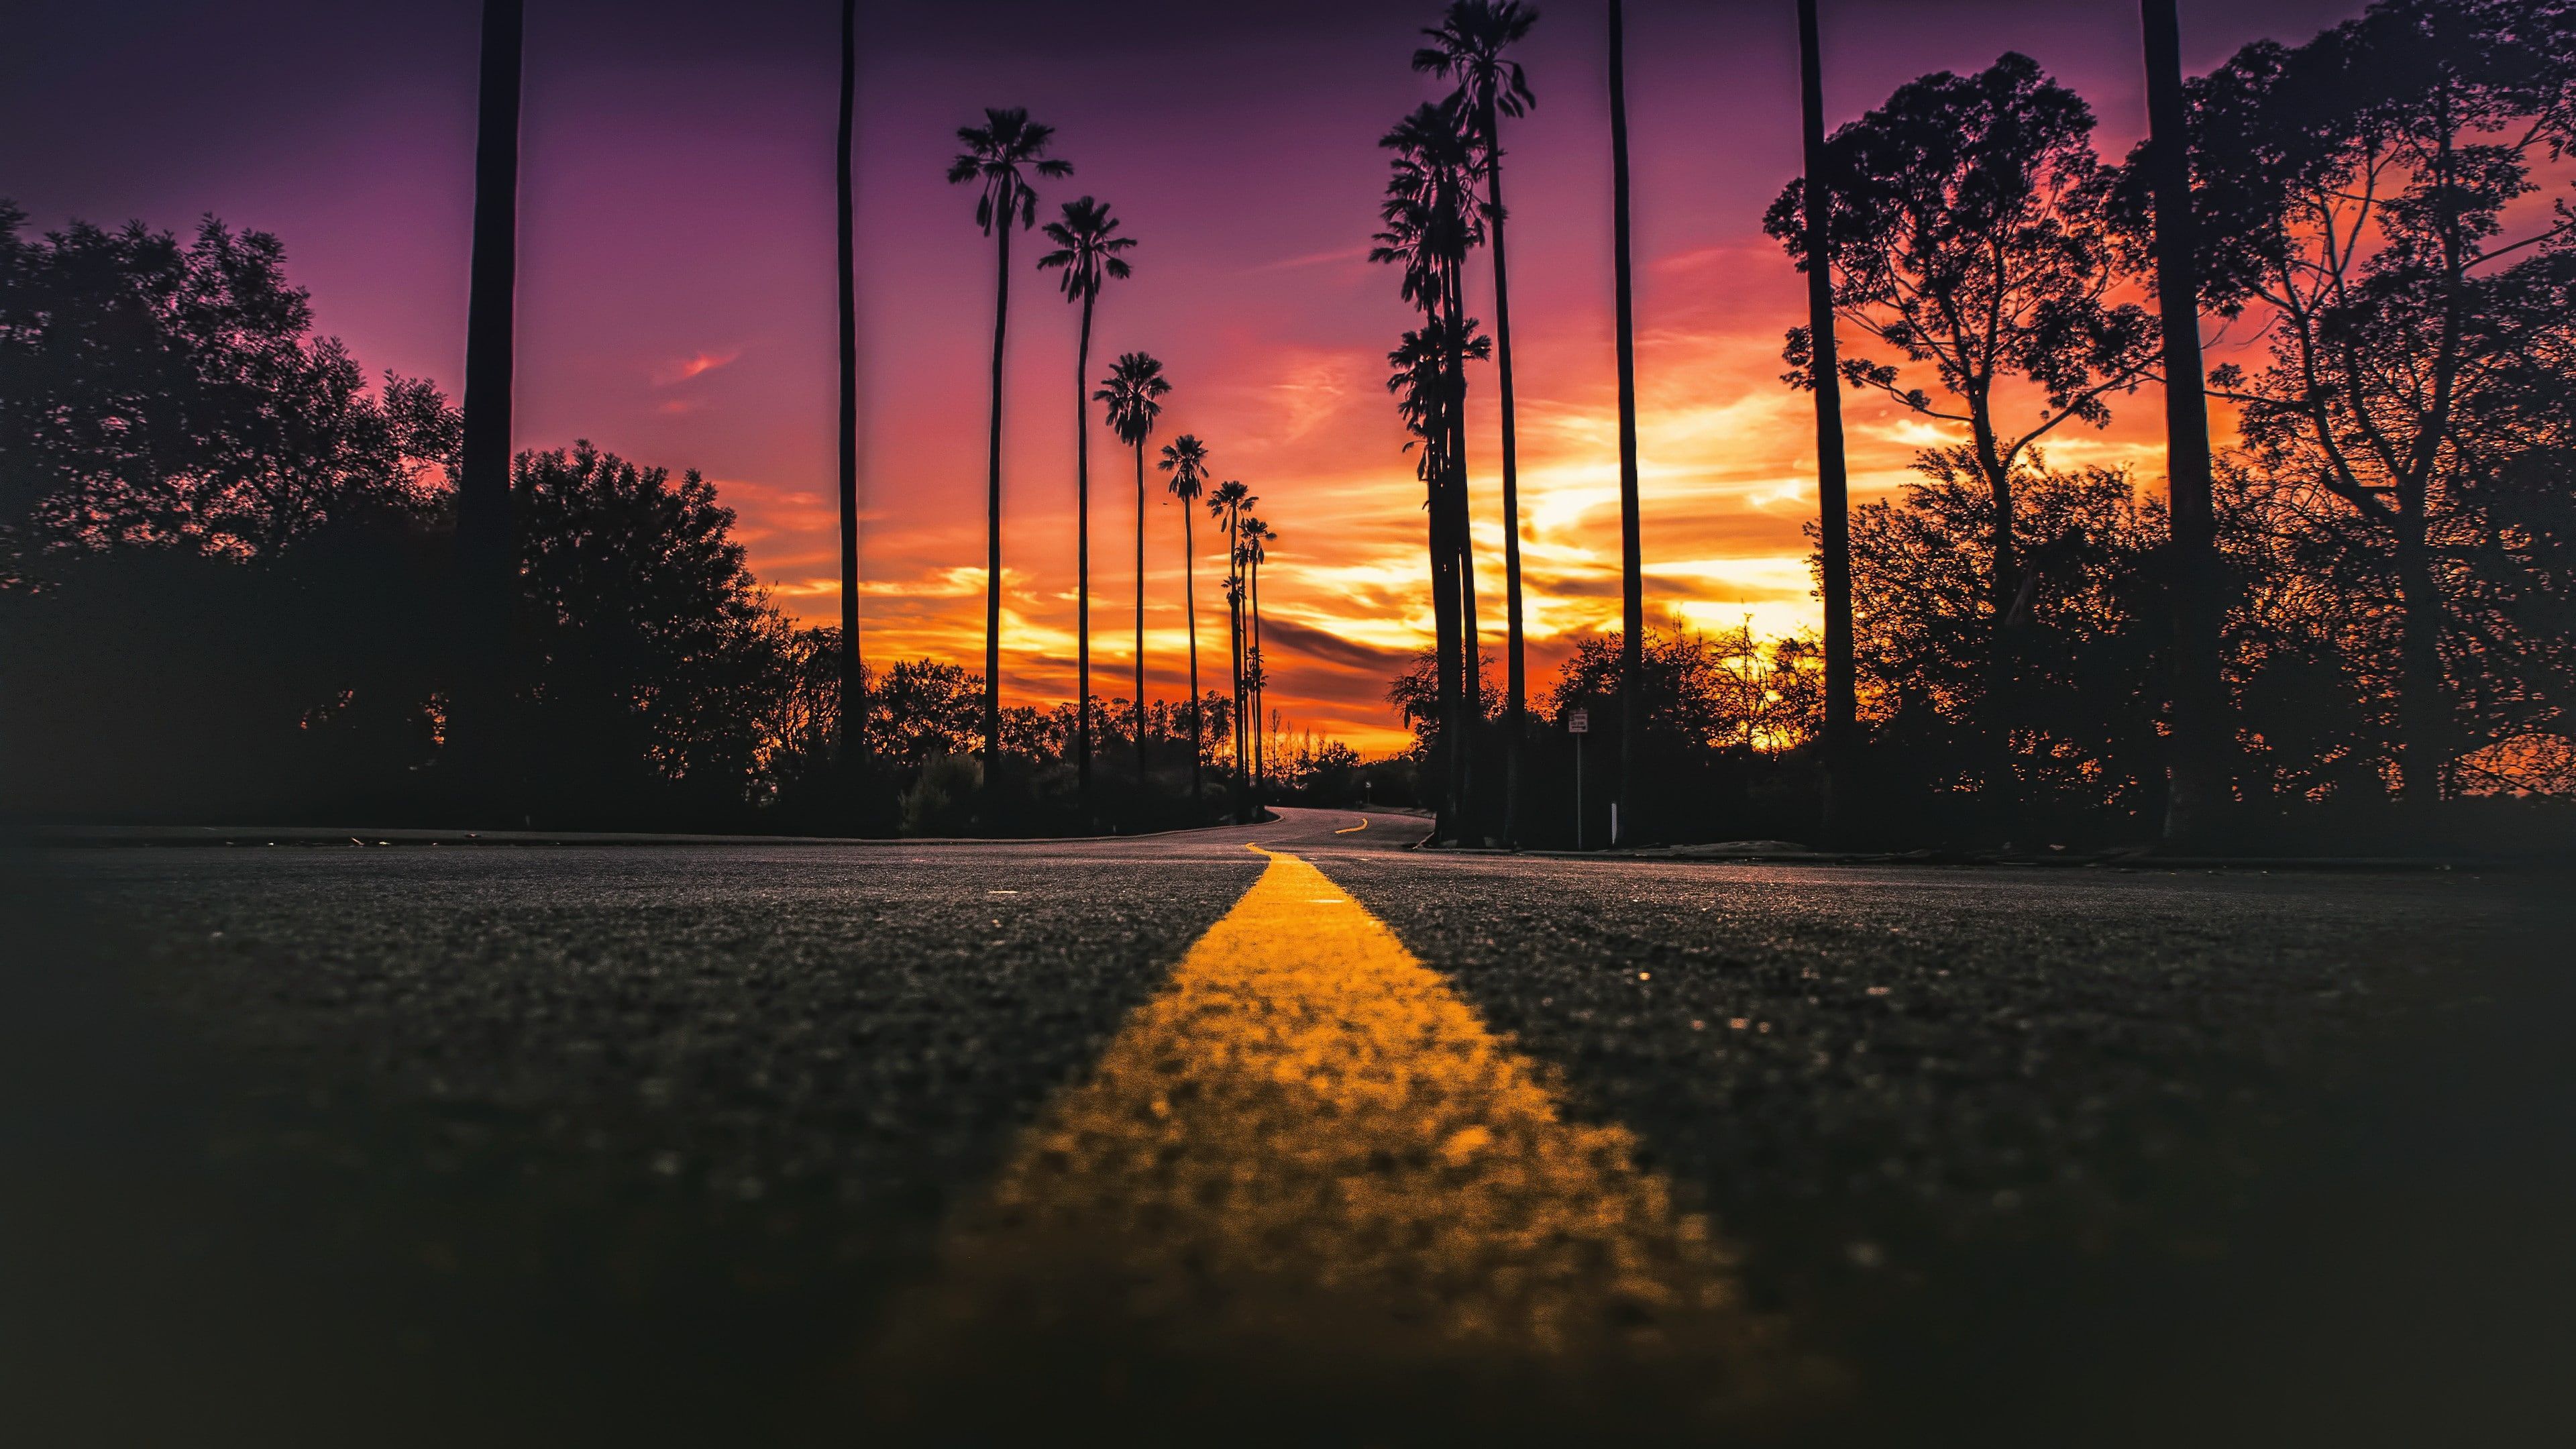 Los Angeles #California #road #palms #sunset K K #wallpaper #hdwallpaper #desktop. Sunset wallpaper, California wallpaper, Sunset photo